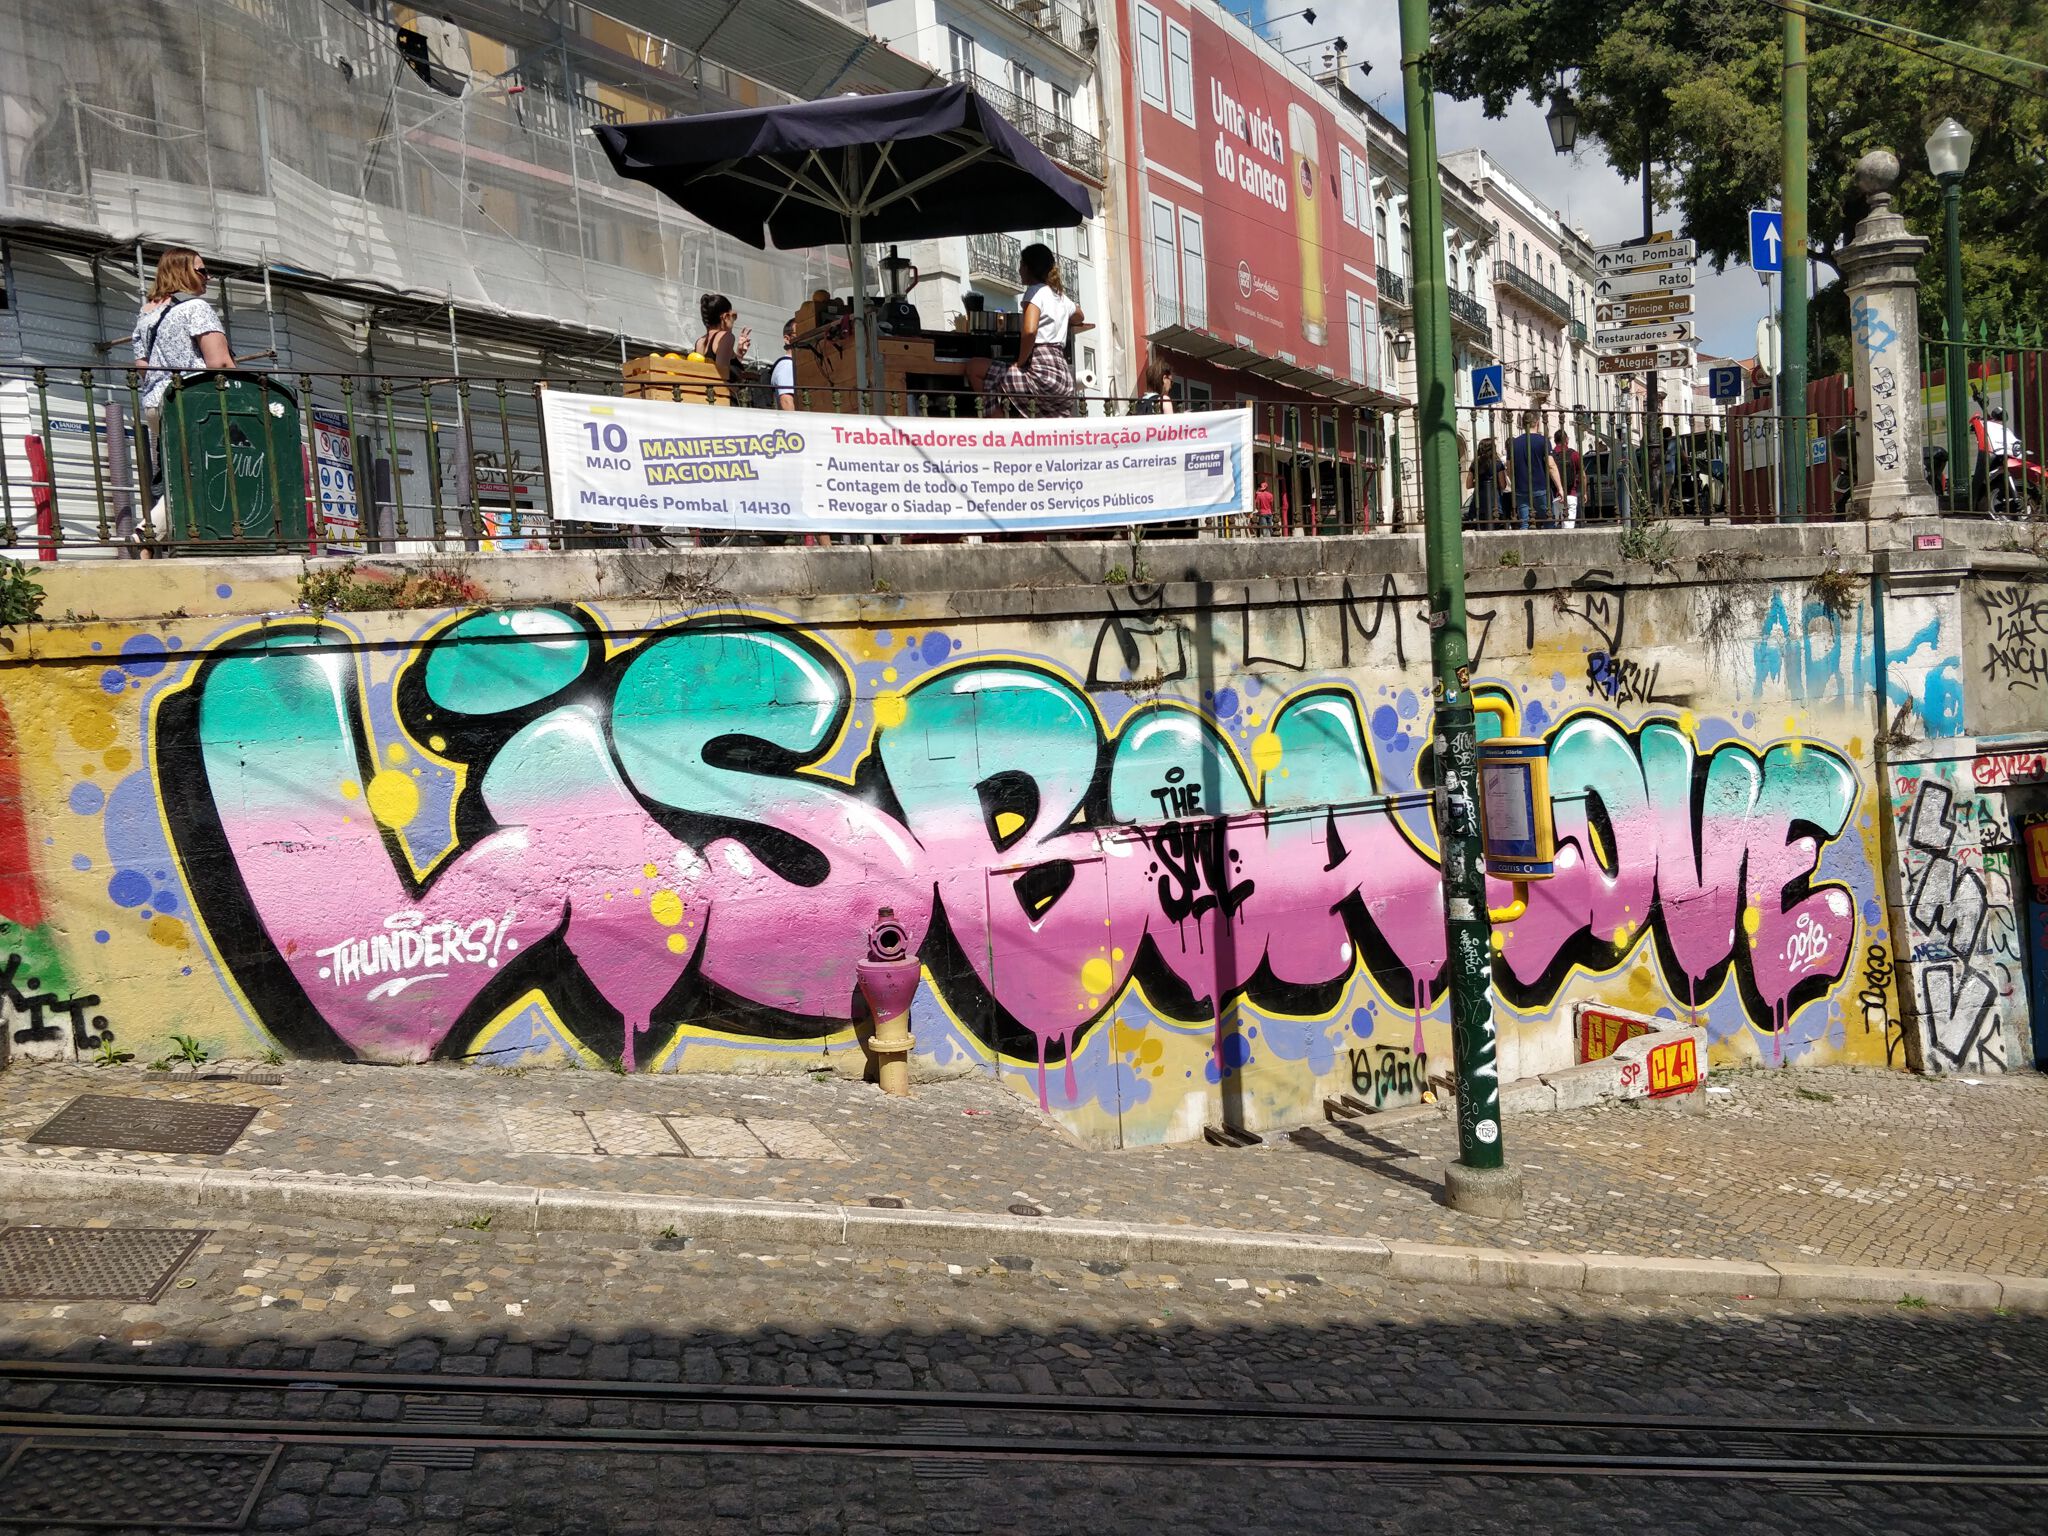 &mdash;LISBON STREET ART TOURS (recommended by Street Art Cities)